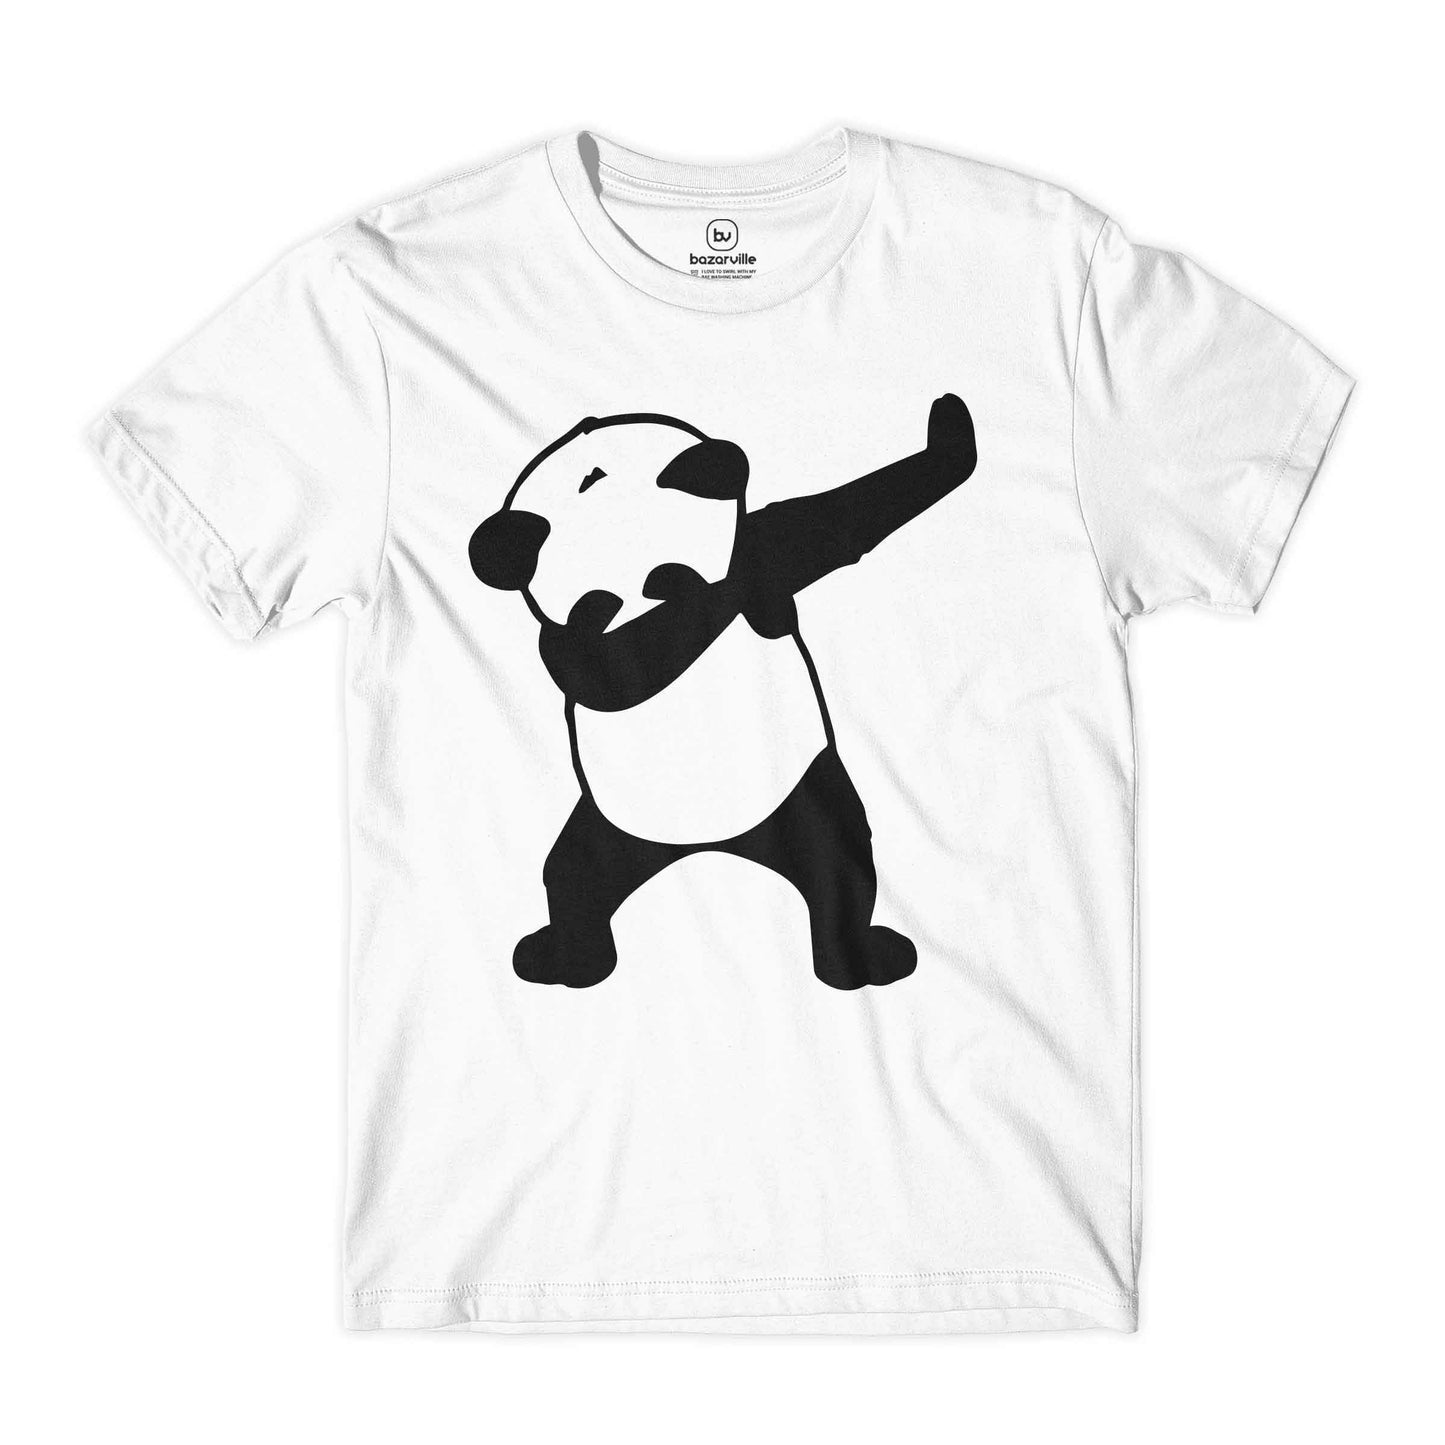 Bazarville Customer S / White Dab Panda